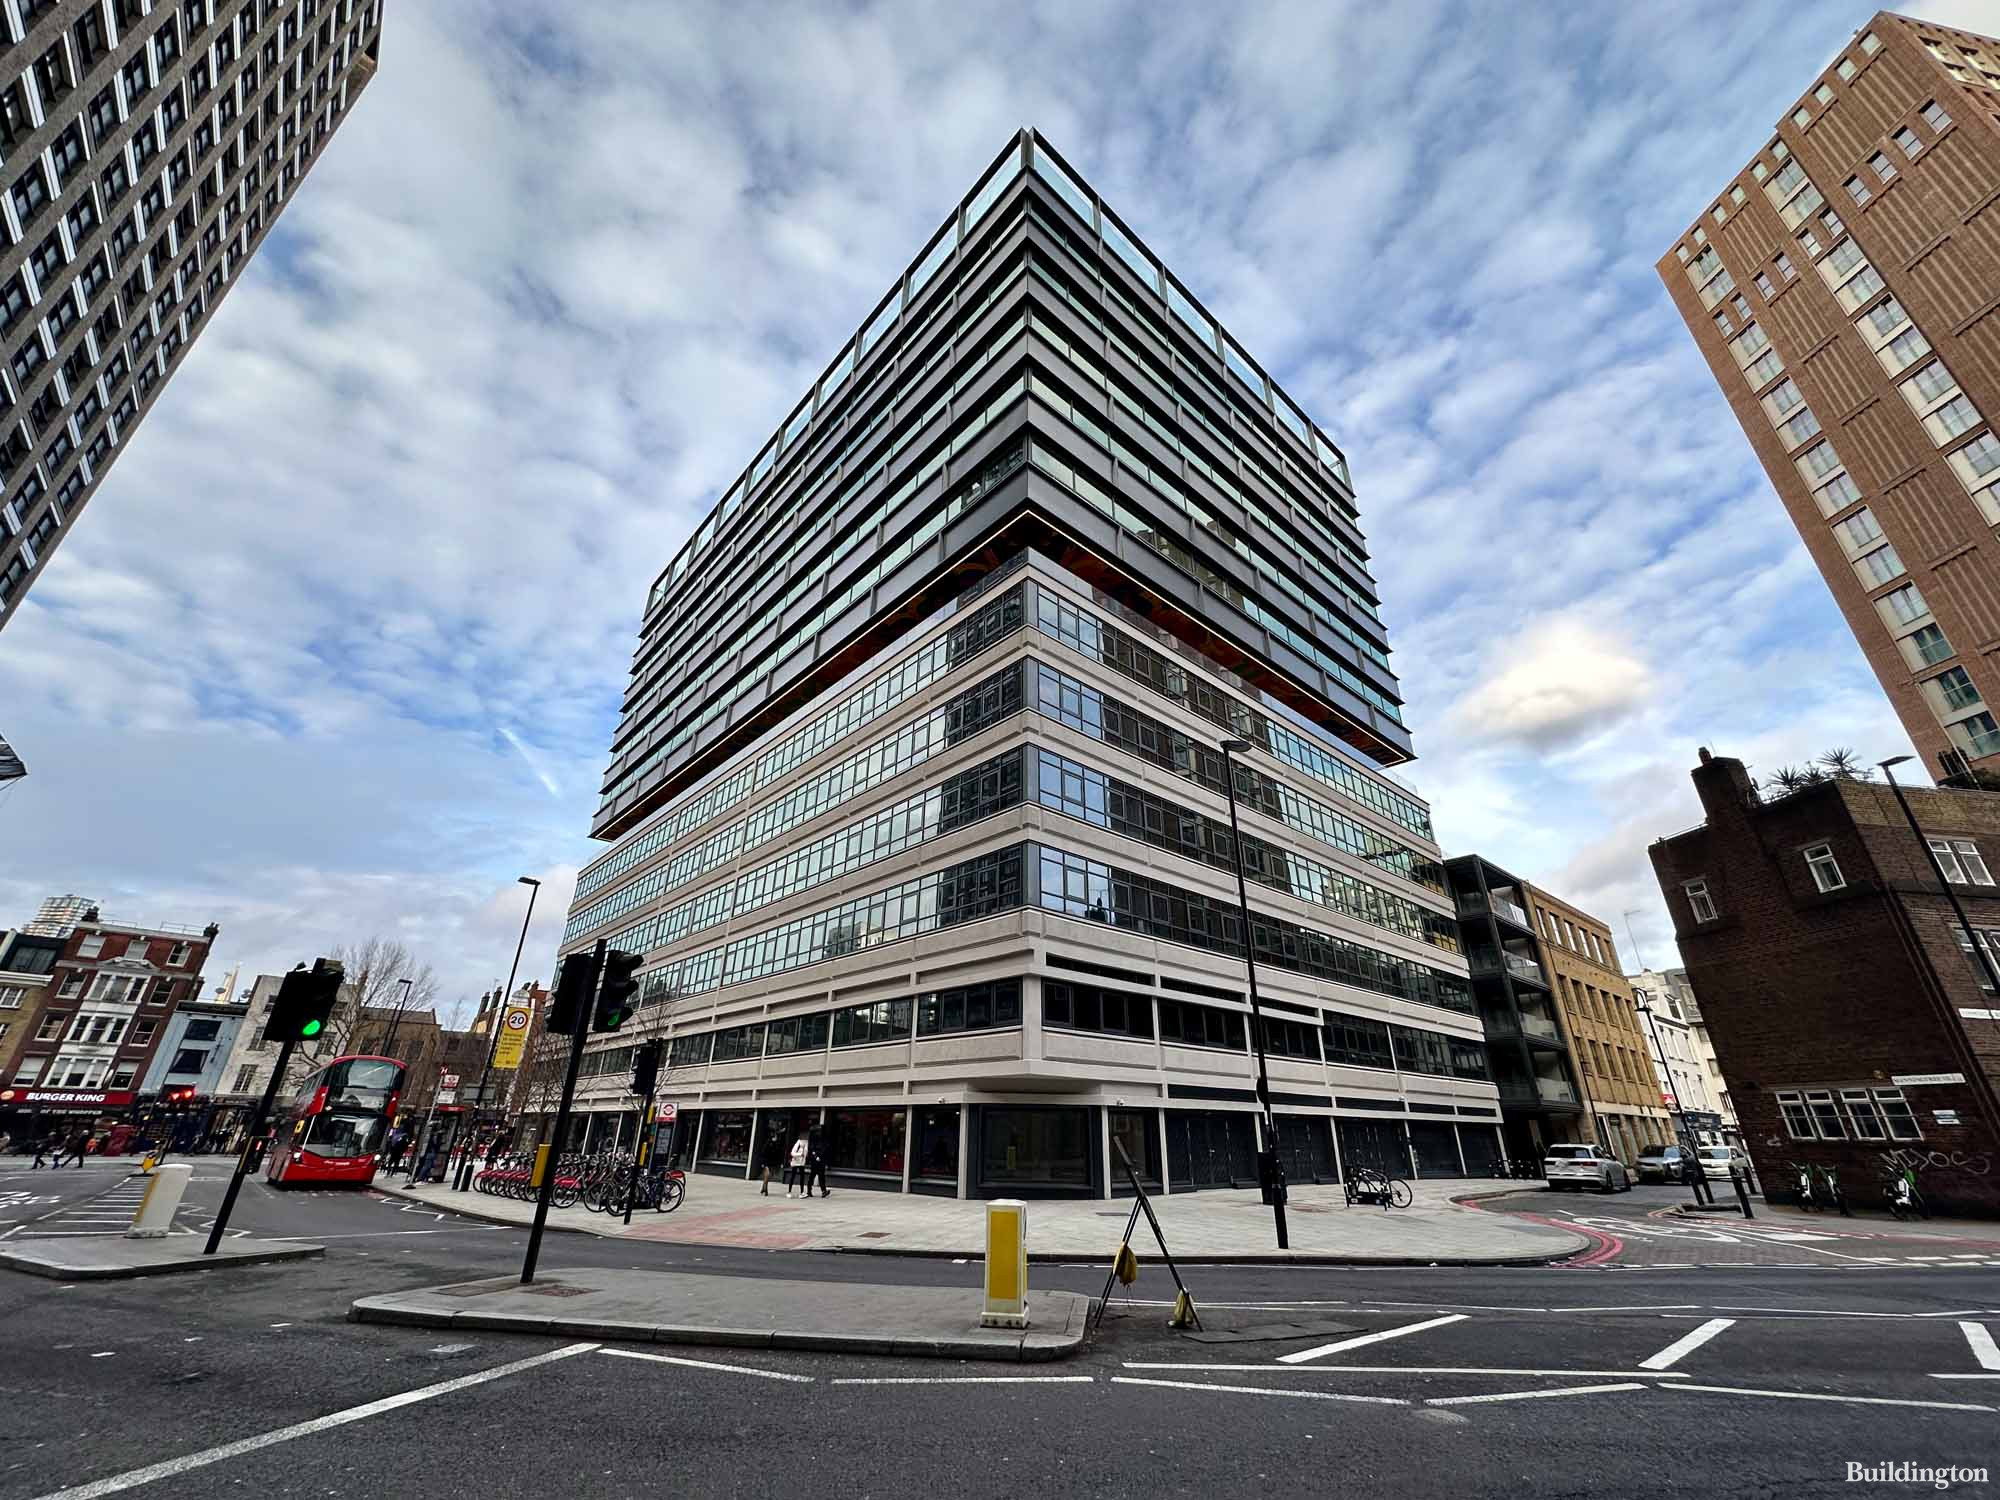 The Rowe office building on Whitechapel High Street in London E1